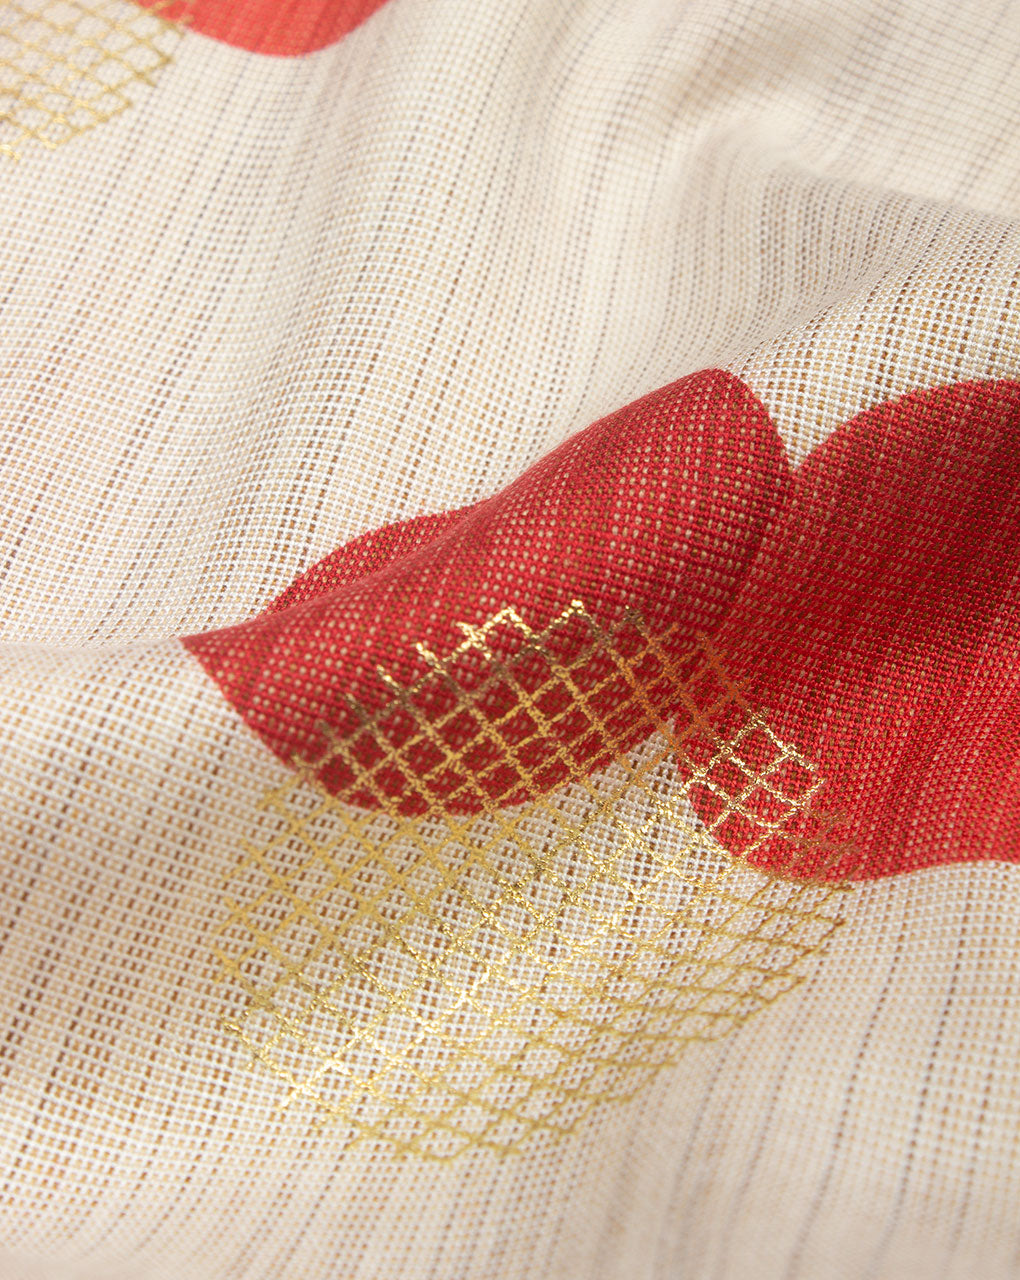 Off-White Red Geometric Pattern Foil Screen Print Rayon Fabric - Fabriclore.com